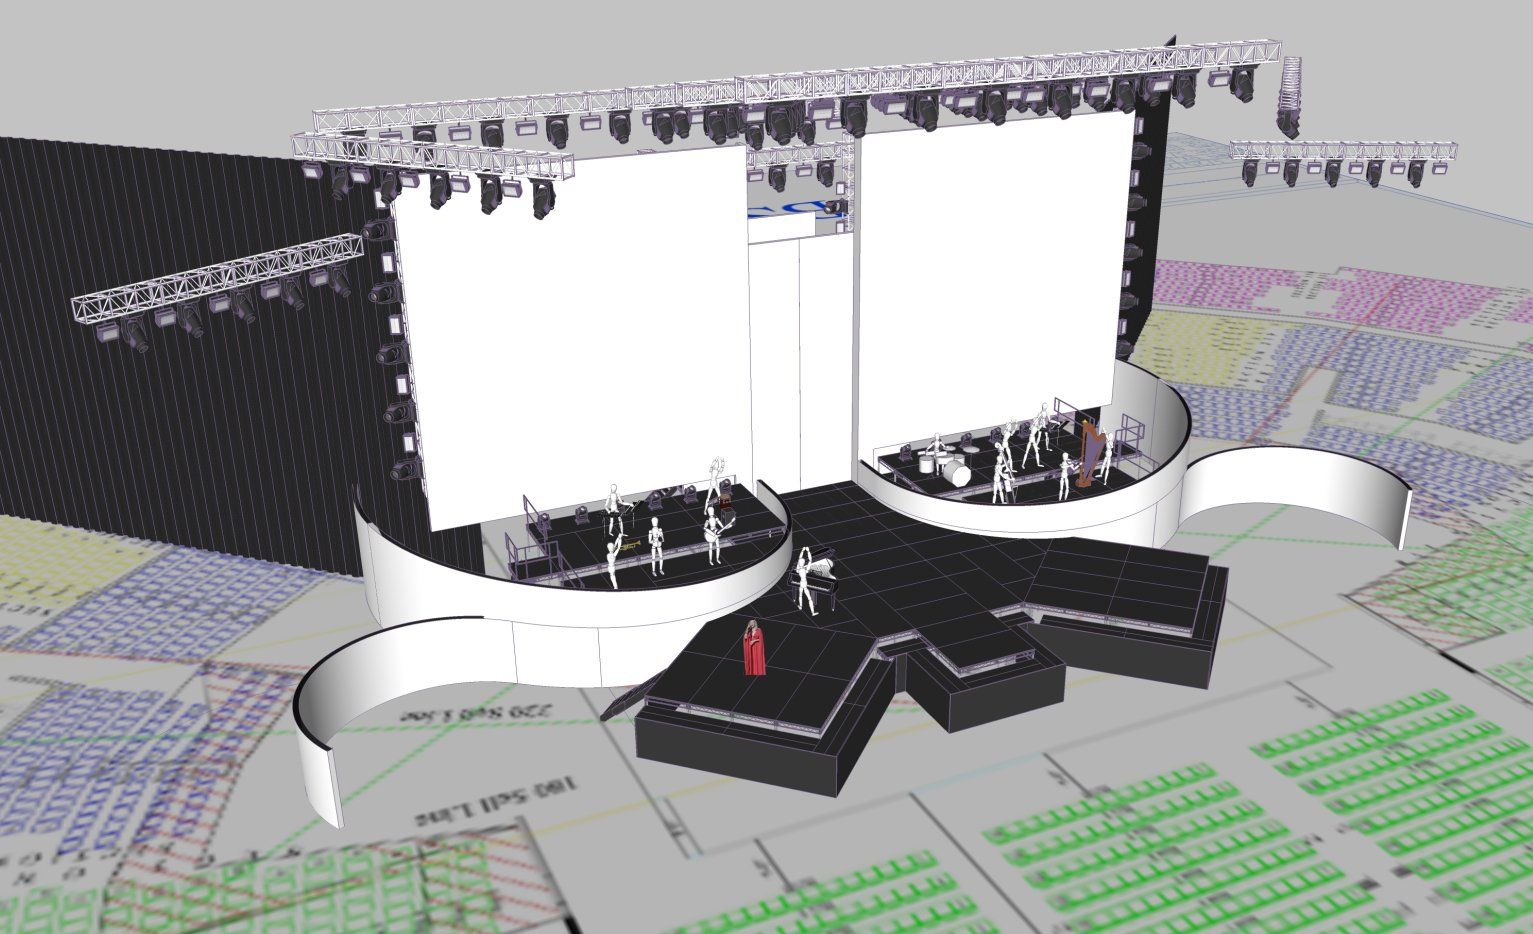 Railton-designed concert stage for Barbra Streisand's 2016 tour.